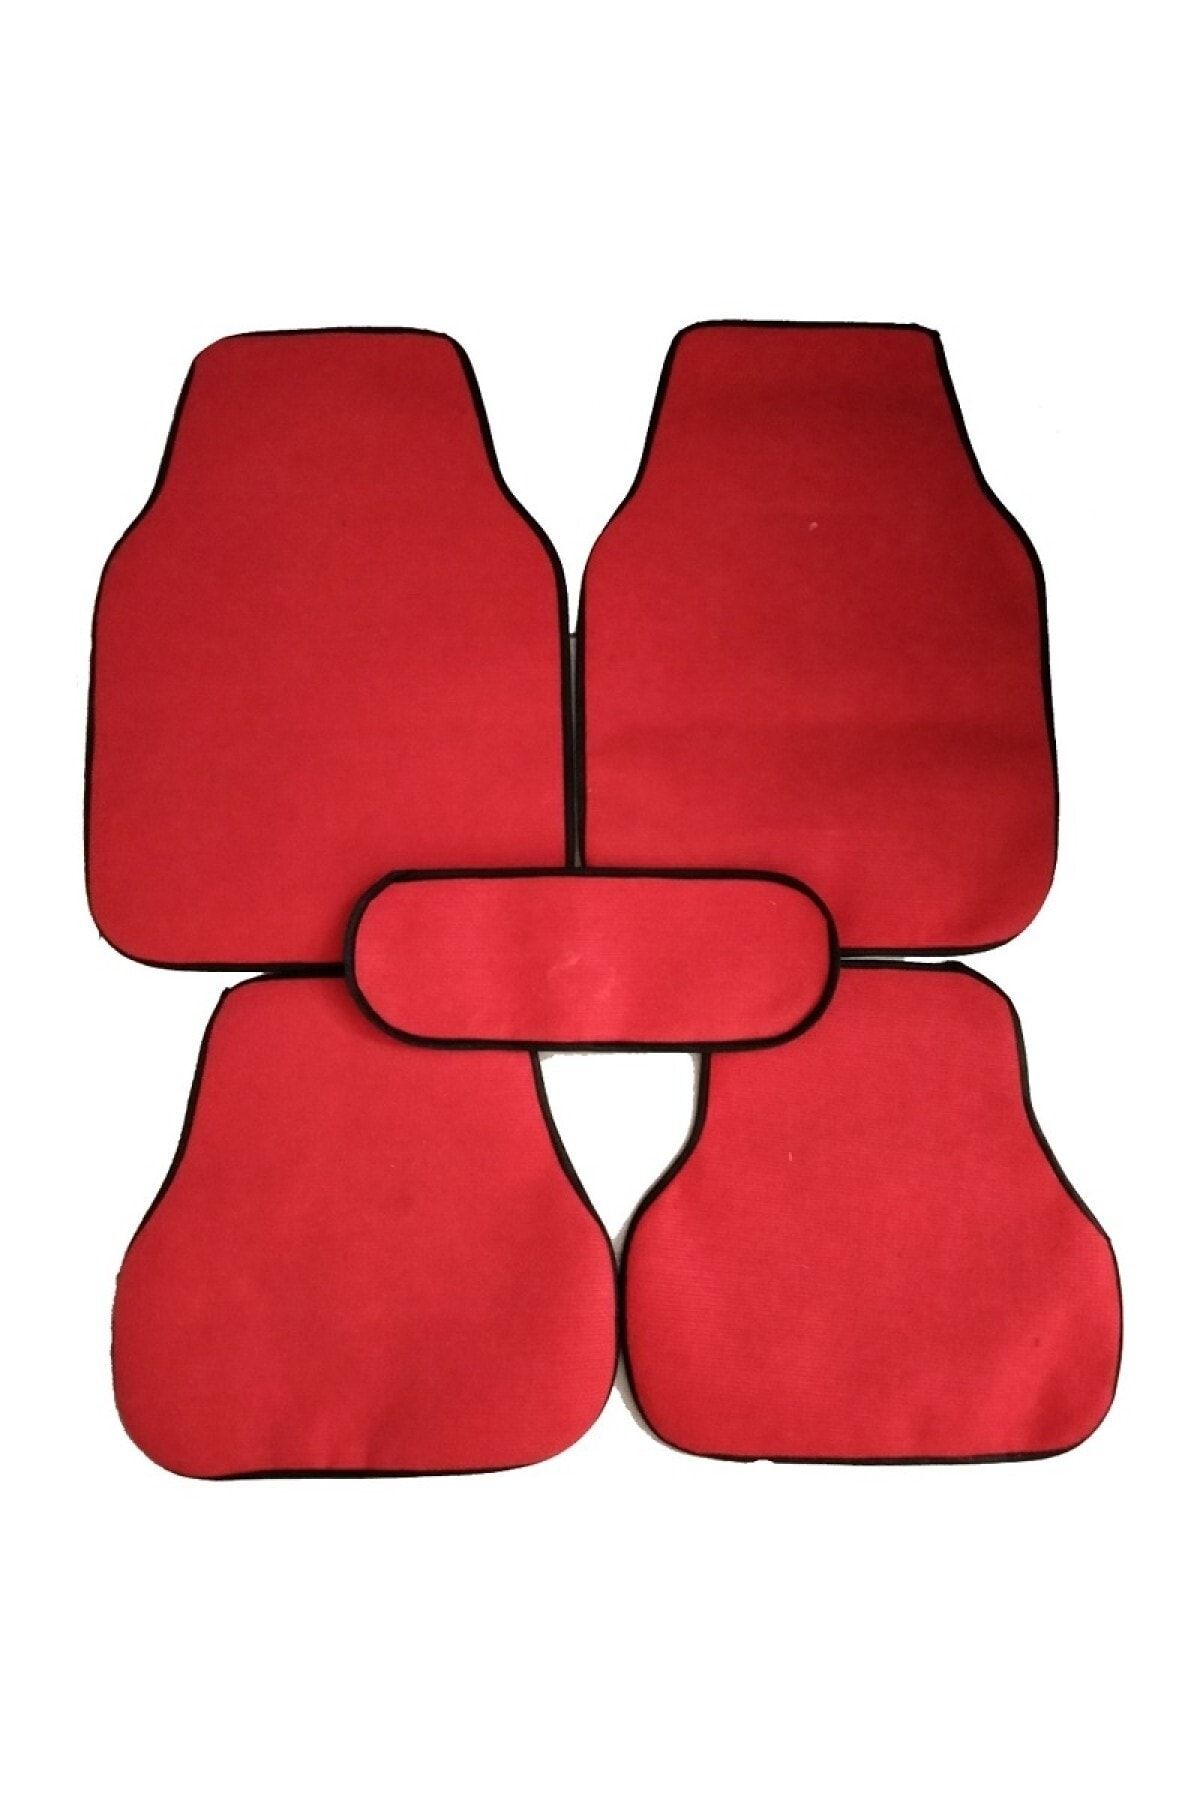 Zifona Mazda Lantis Halı Oto Paspası 5 Parça Set Kırmızı